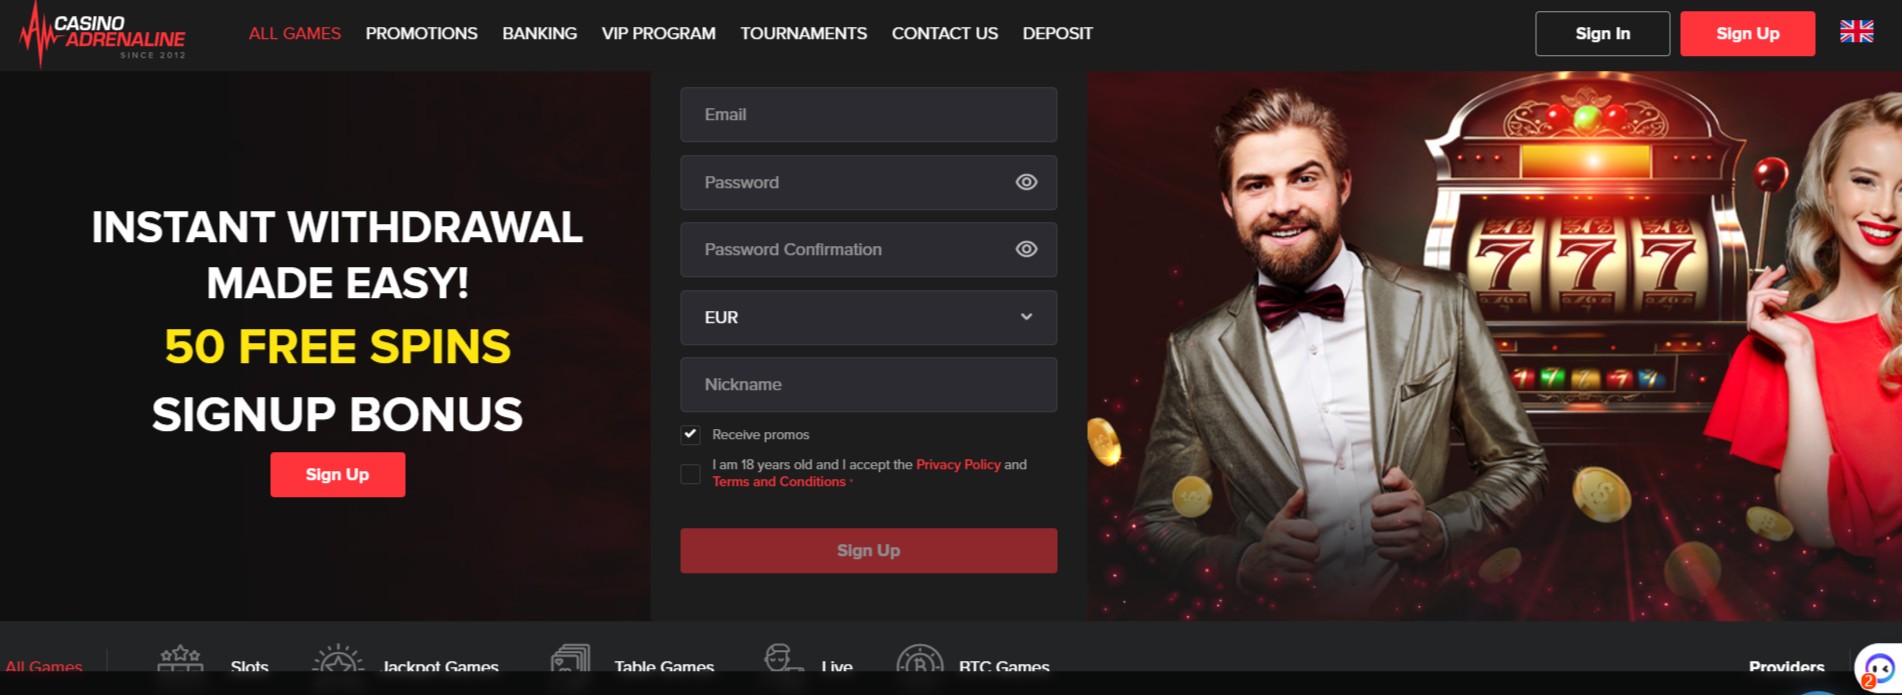 casino adrenaline website homepage screenshot